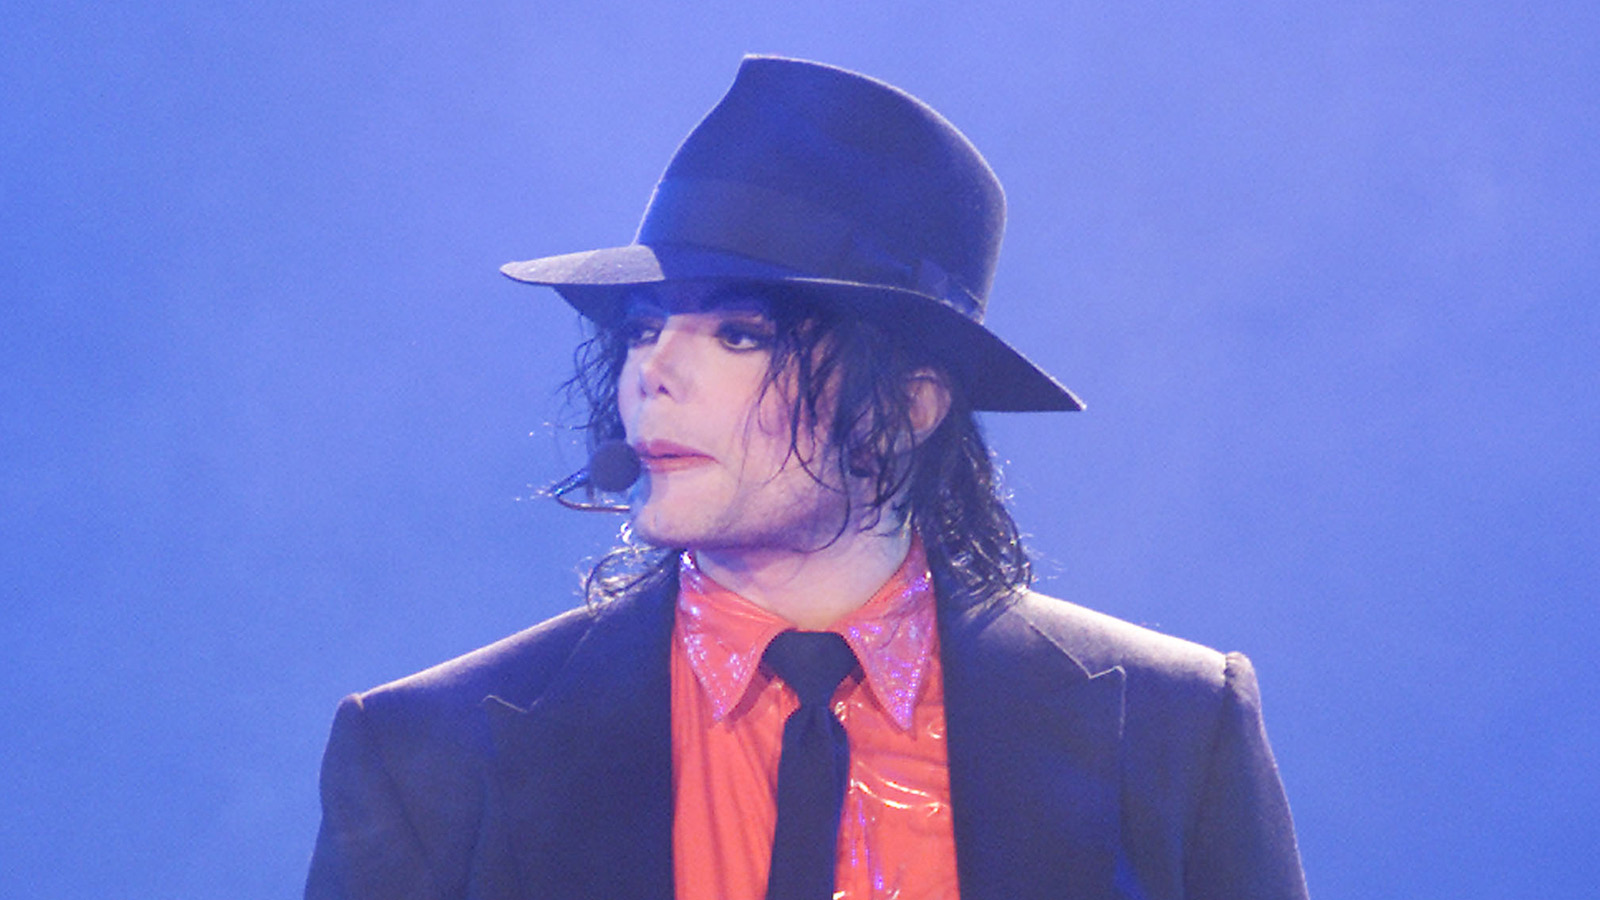 <p>Майкл Джексон родился 29 августа 1958 года в городе Гэри, штат Индиана. На фото: Майкл Джексон, 2002 год</p>